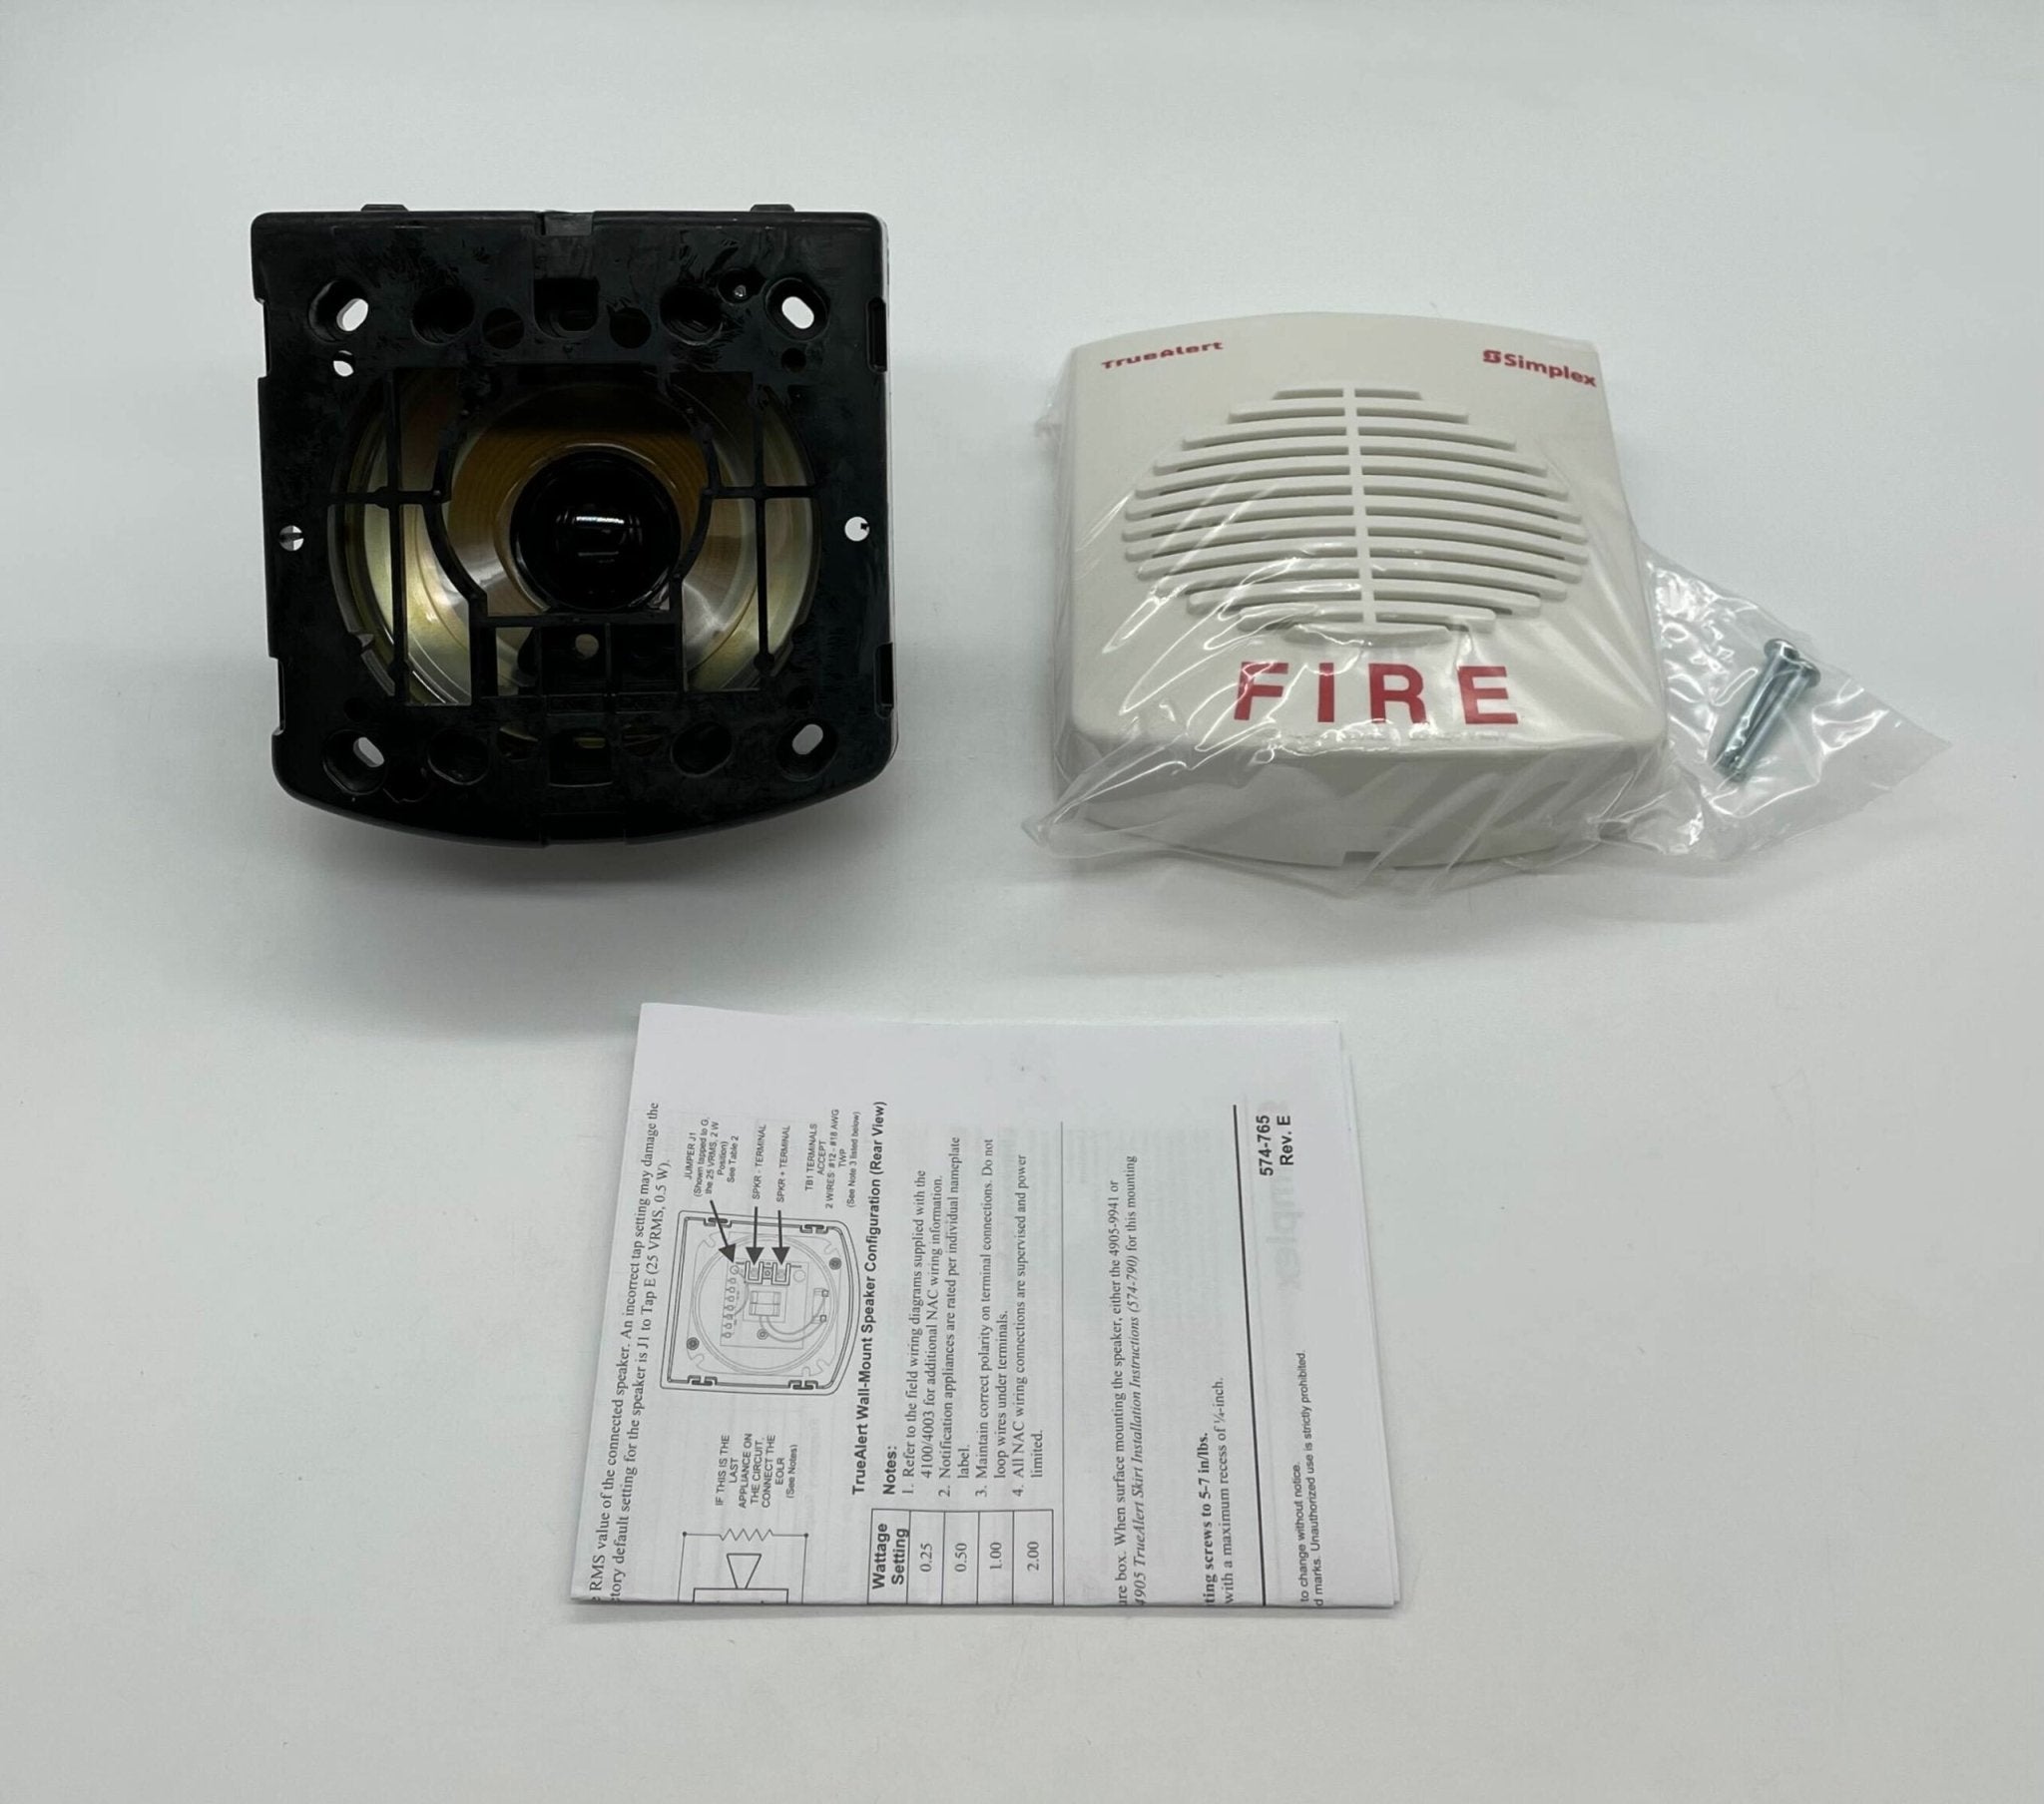 Simplex 4902-9717 Speaker 25V/70Vrms White Truea - The Fire Alarm Supplier